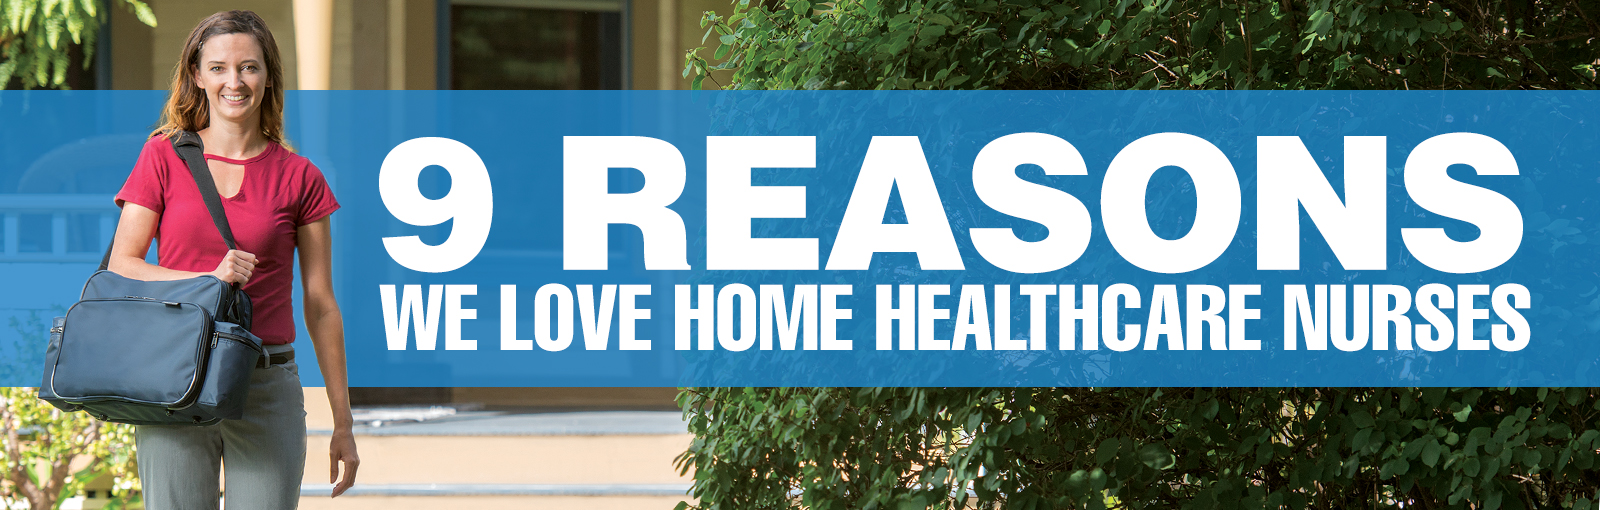 9 Reasons We Love Home Healthcare Nurses